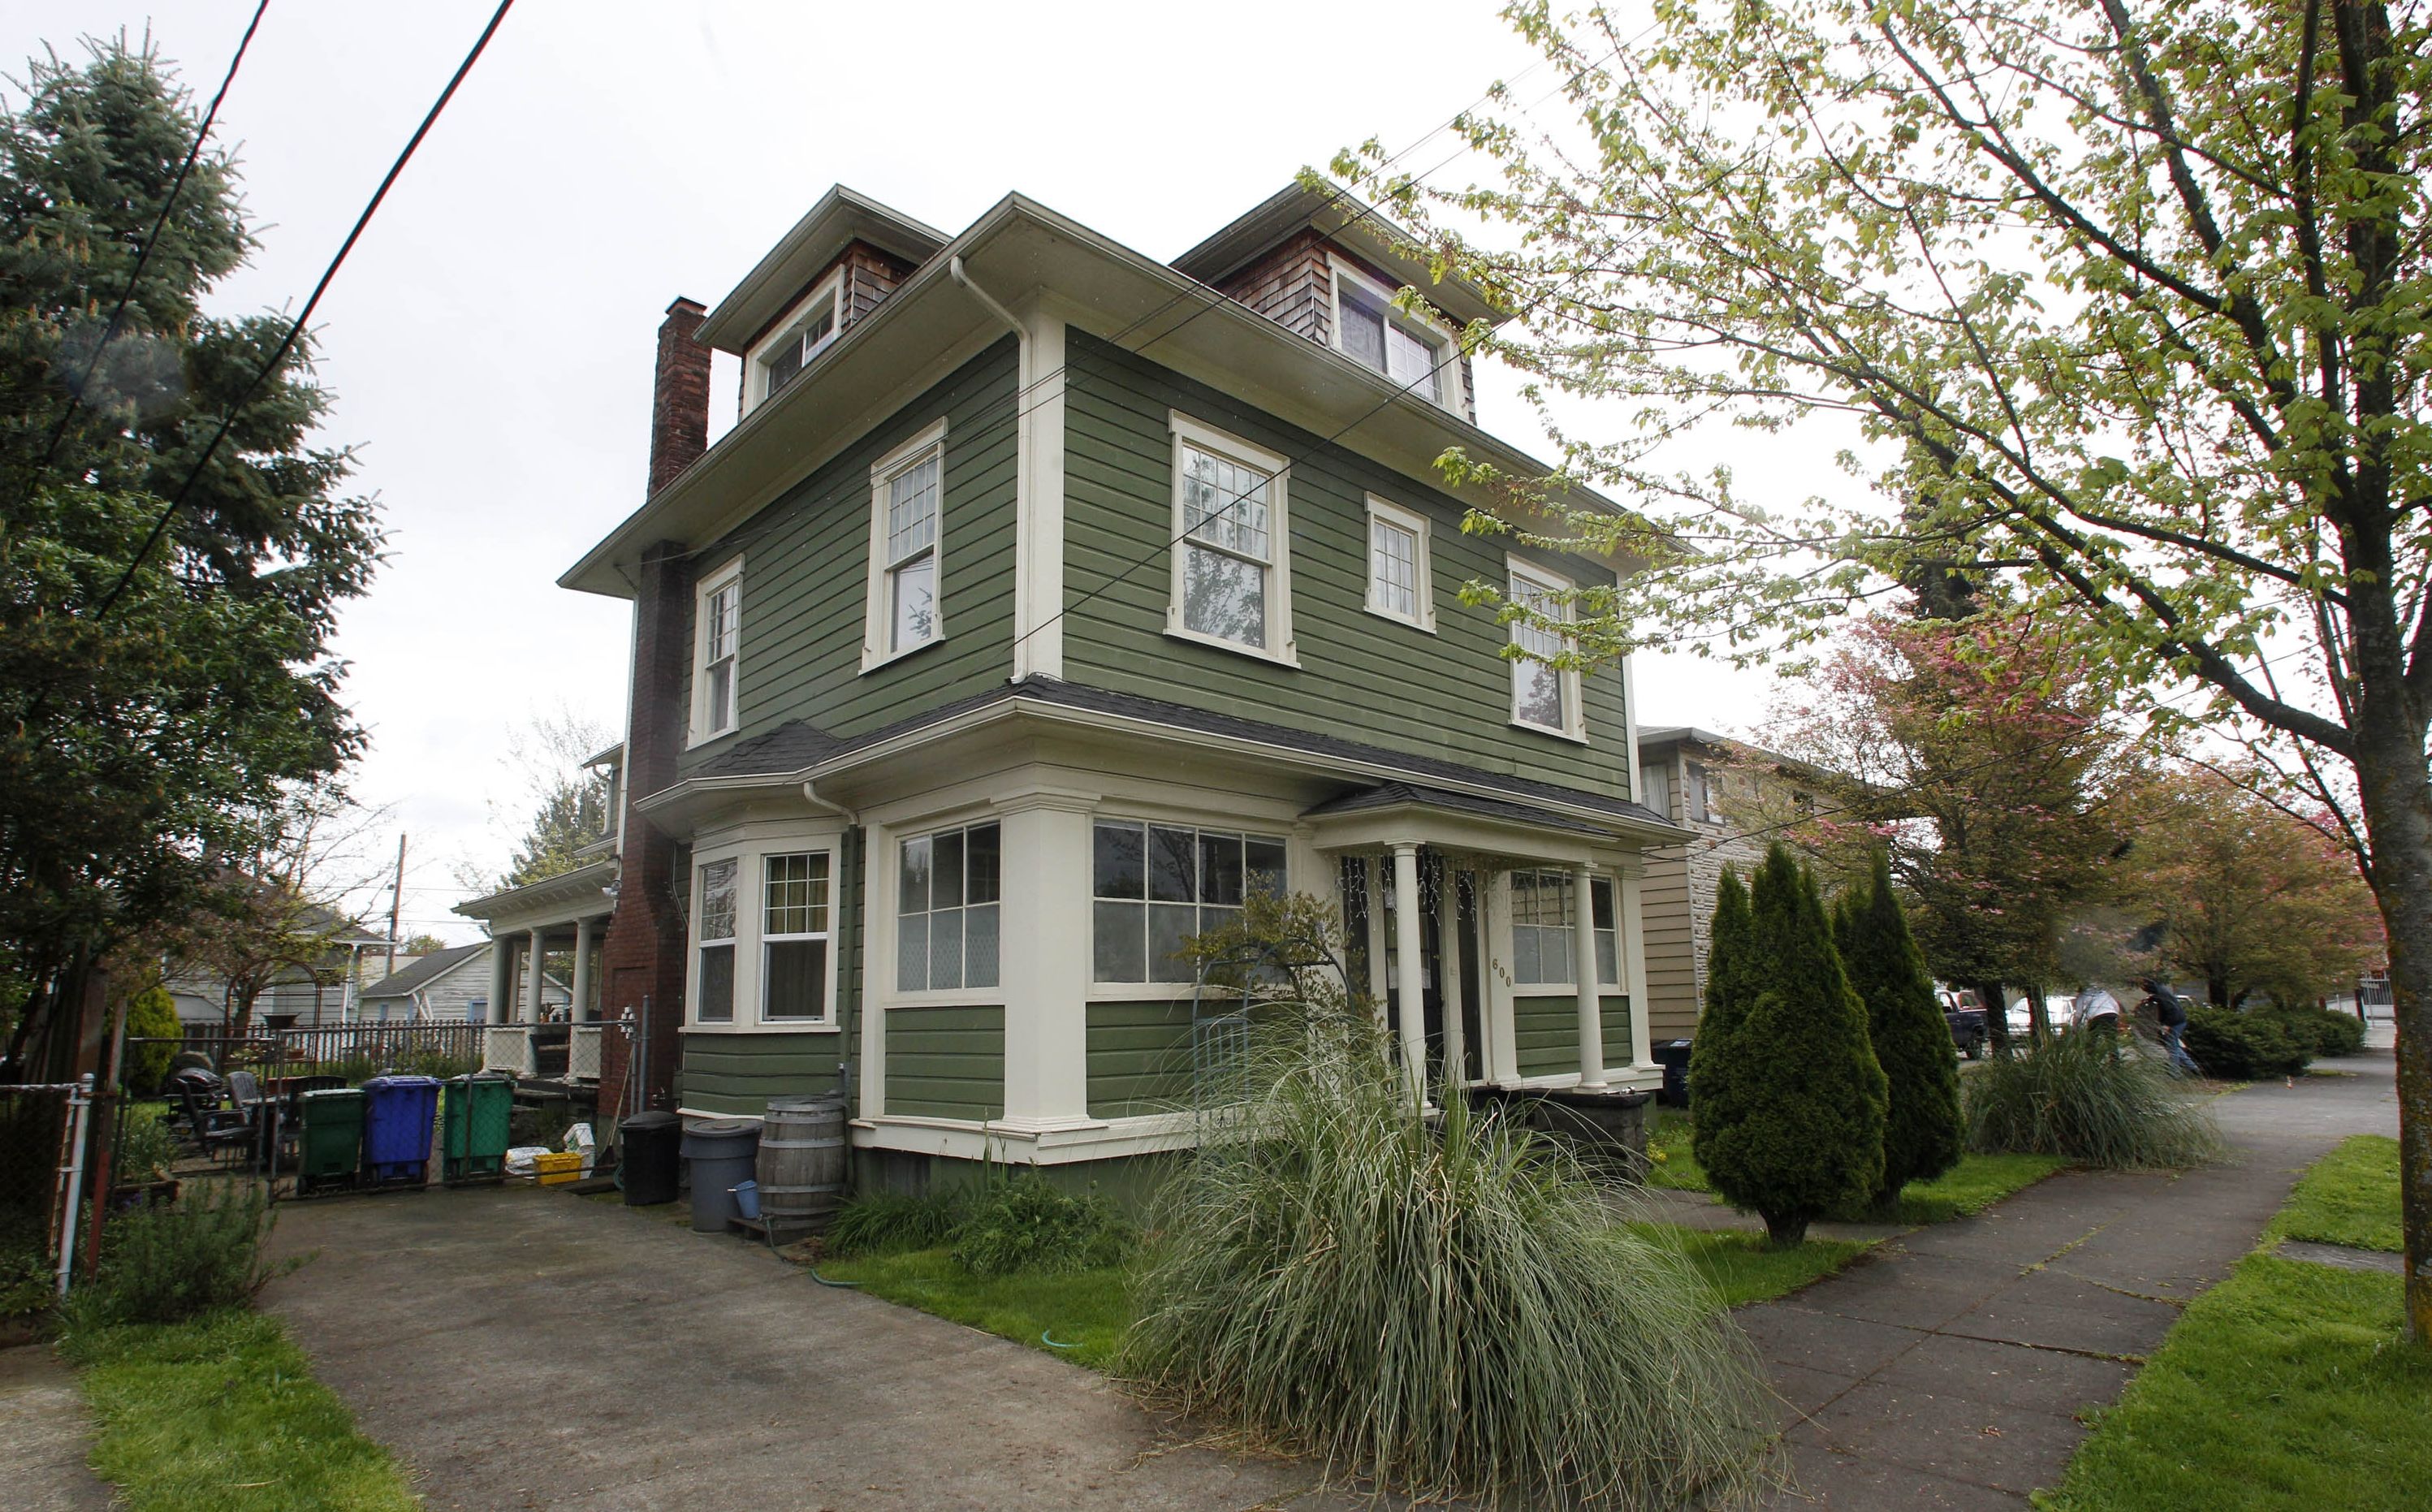  Portland, Oregon house